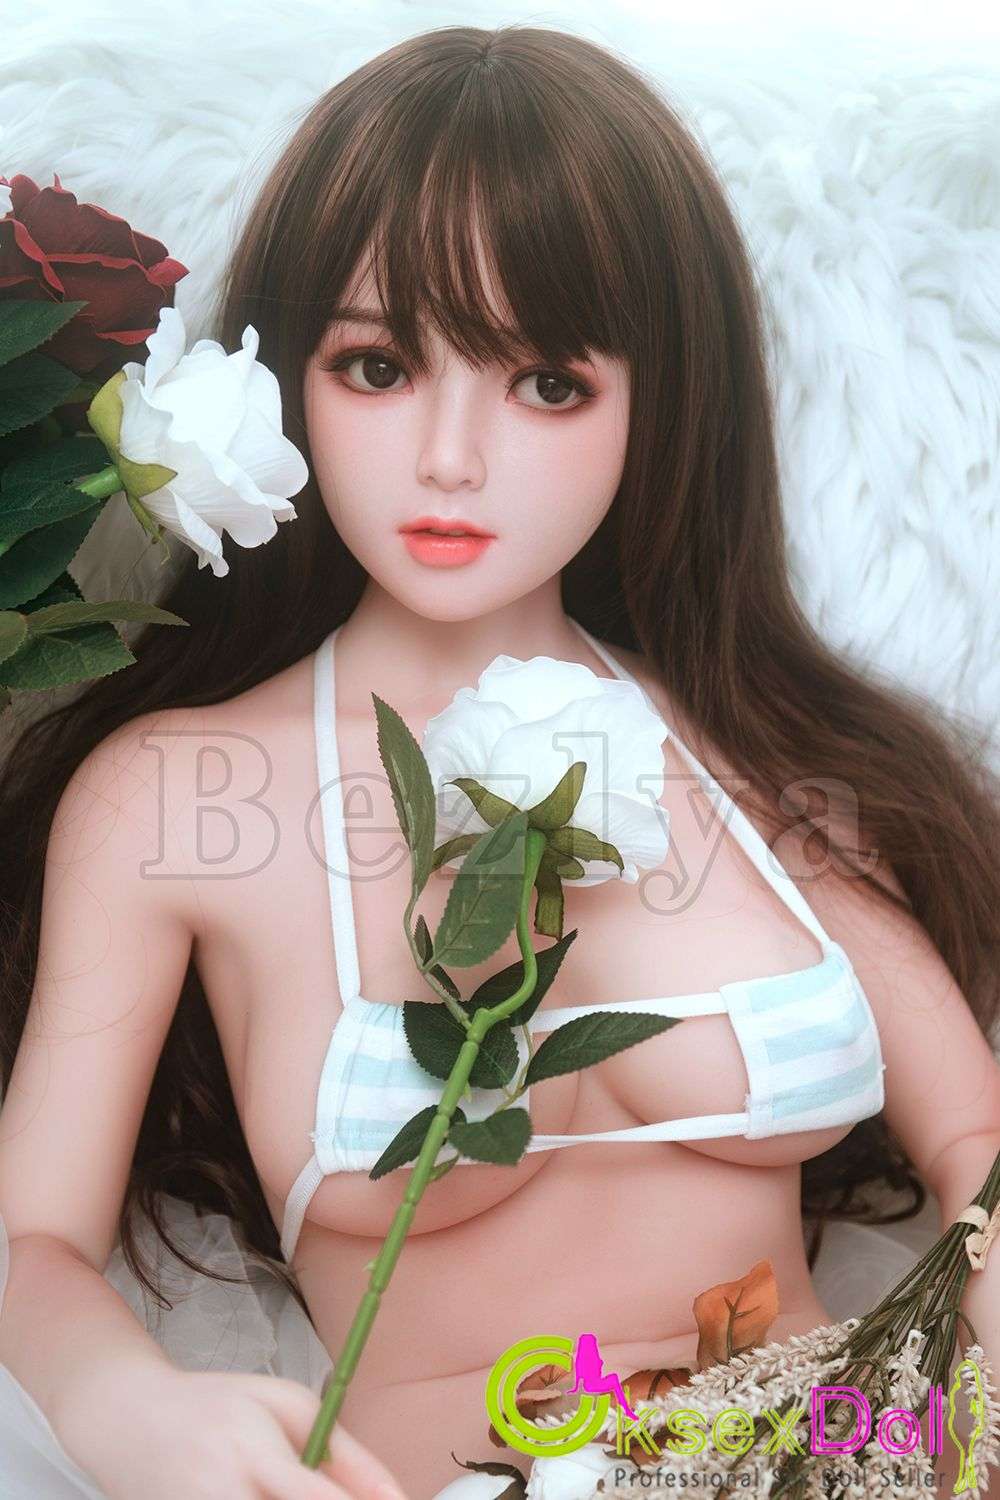 Ran Japanese Sex Doll Pic